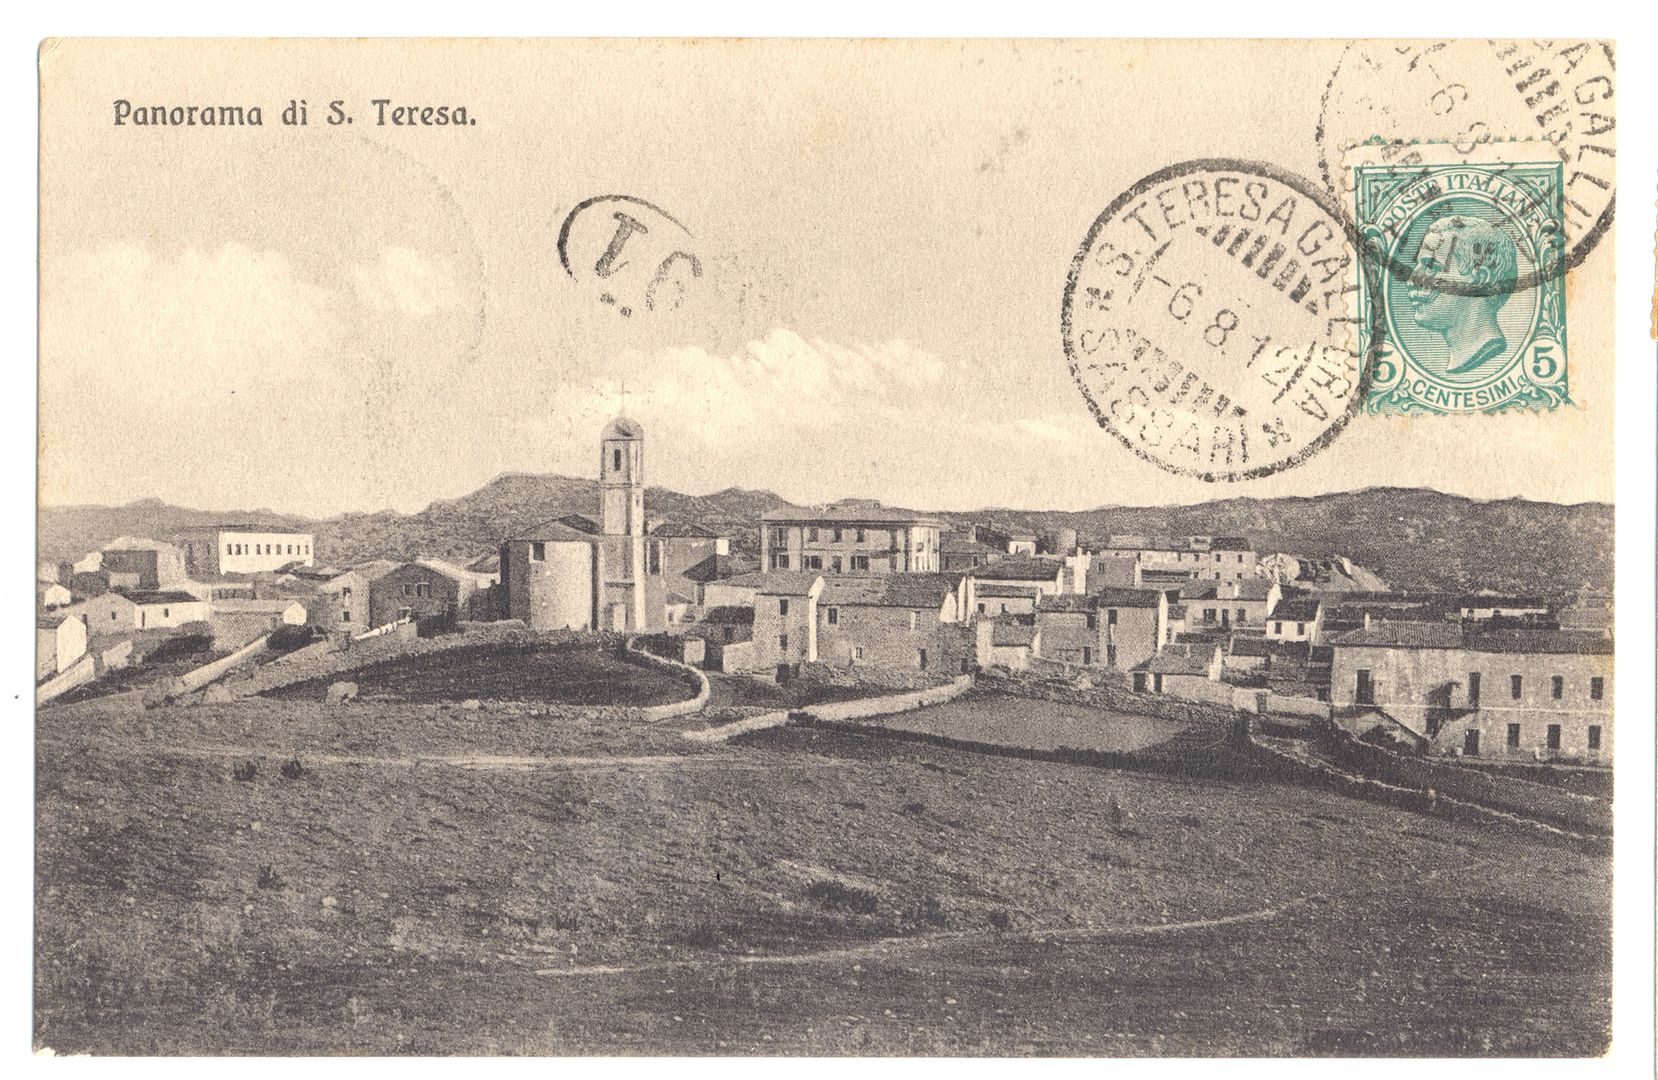 coll. Historical archive of Santa Teresa